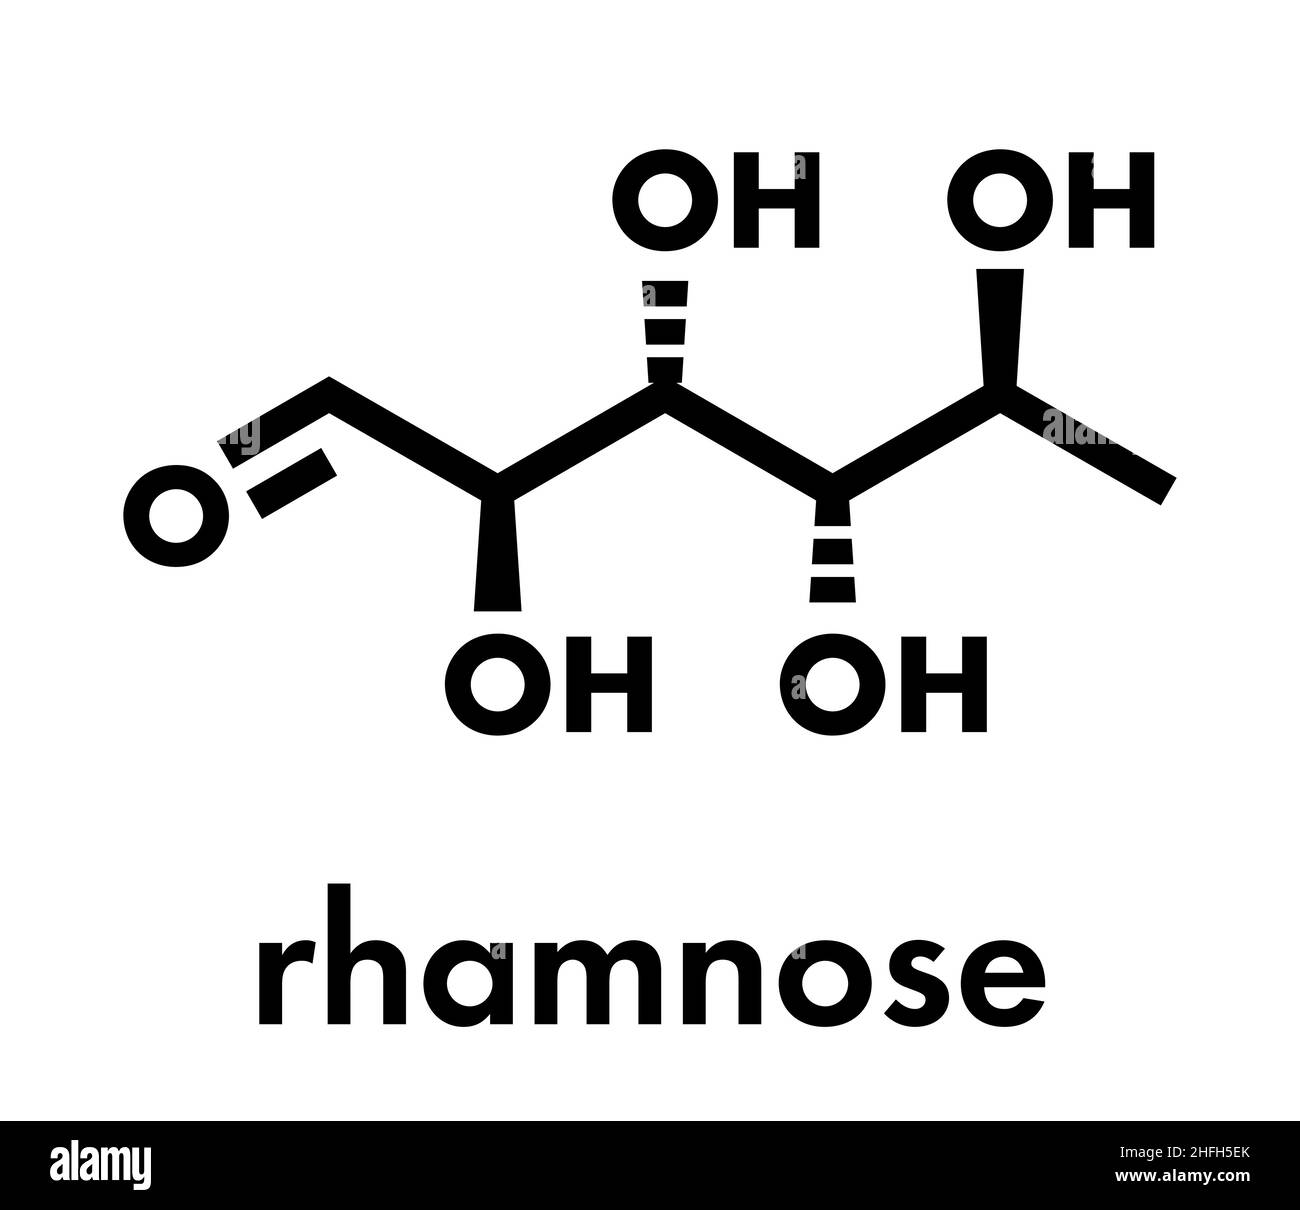 Rhamnose (L-rhamnose) deoxy sugar molecule. Used in cosmetics to treat wrinkles. Skeletal formula. Stock Vector